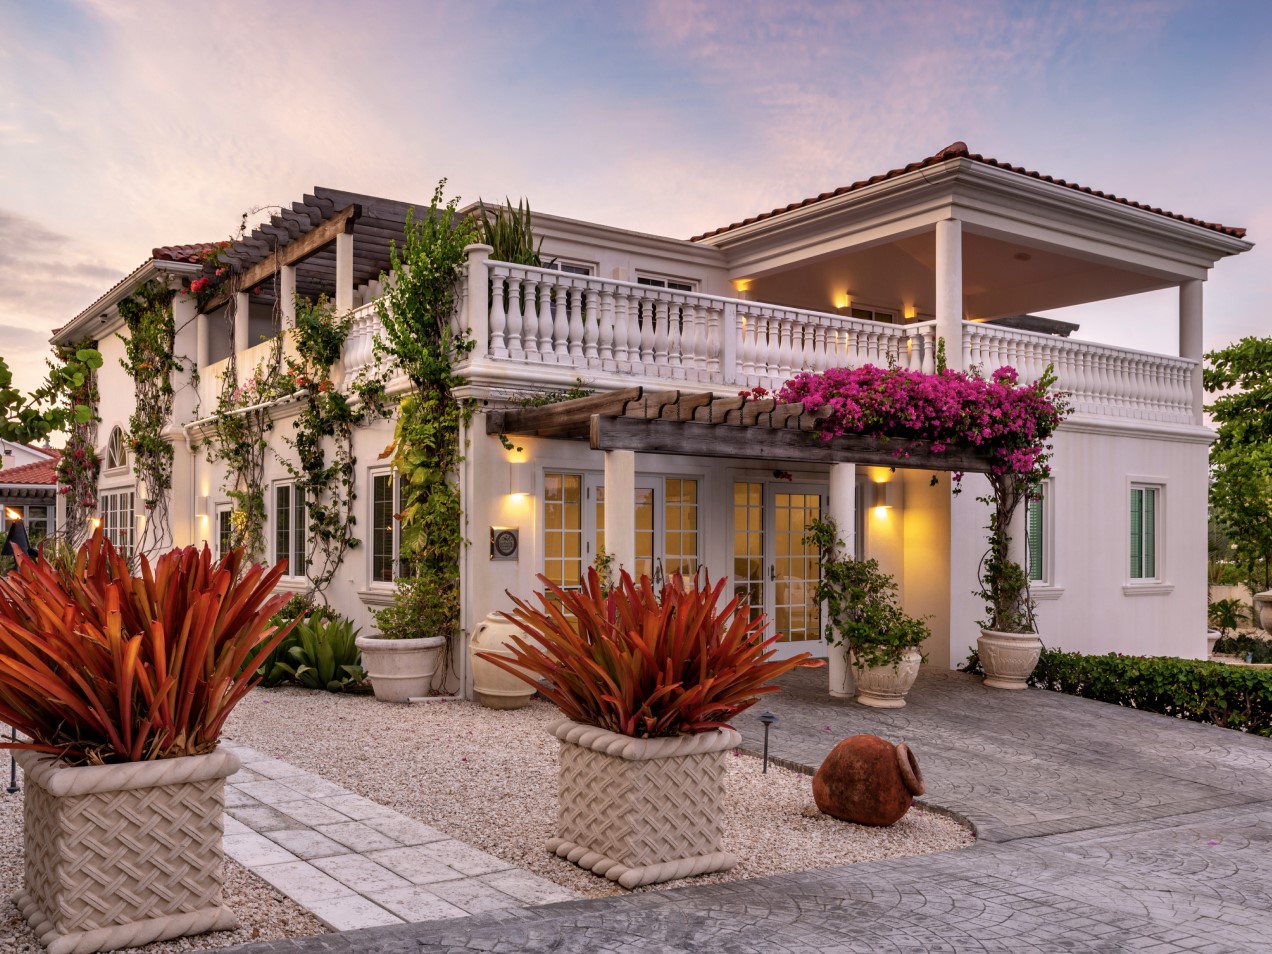 Le Soleil d'Or hotel in Cayman Brac